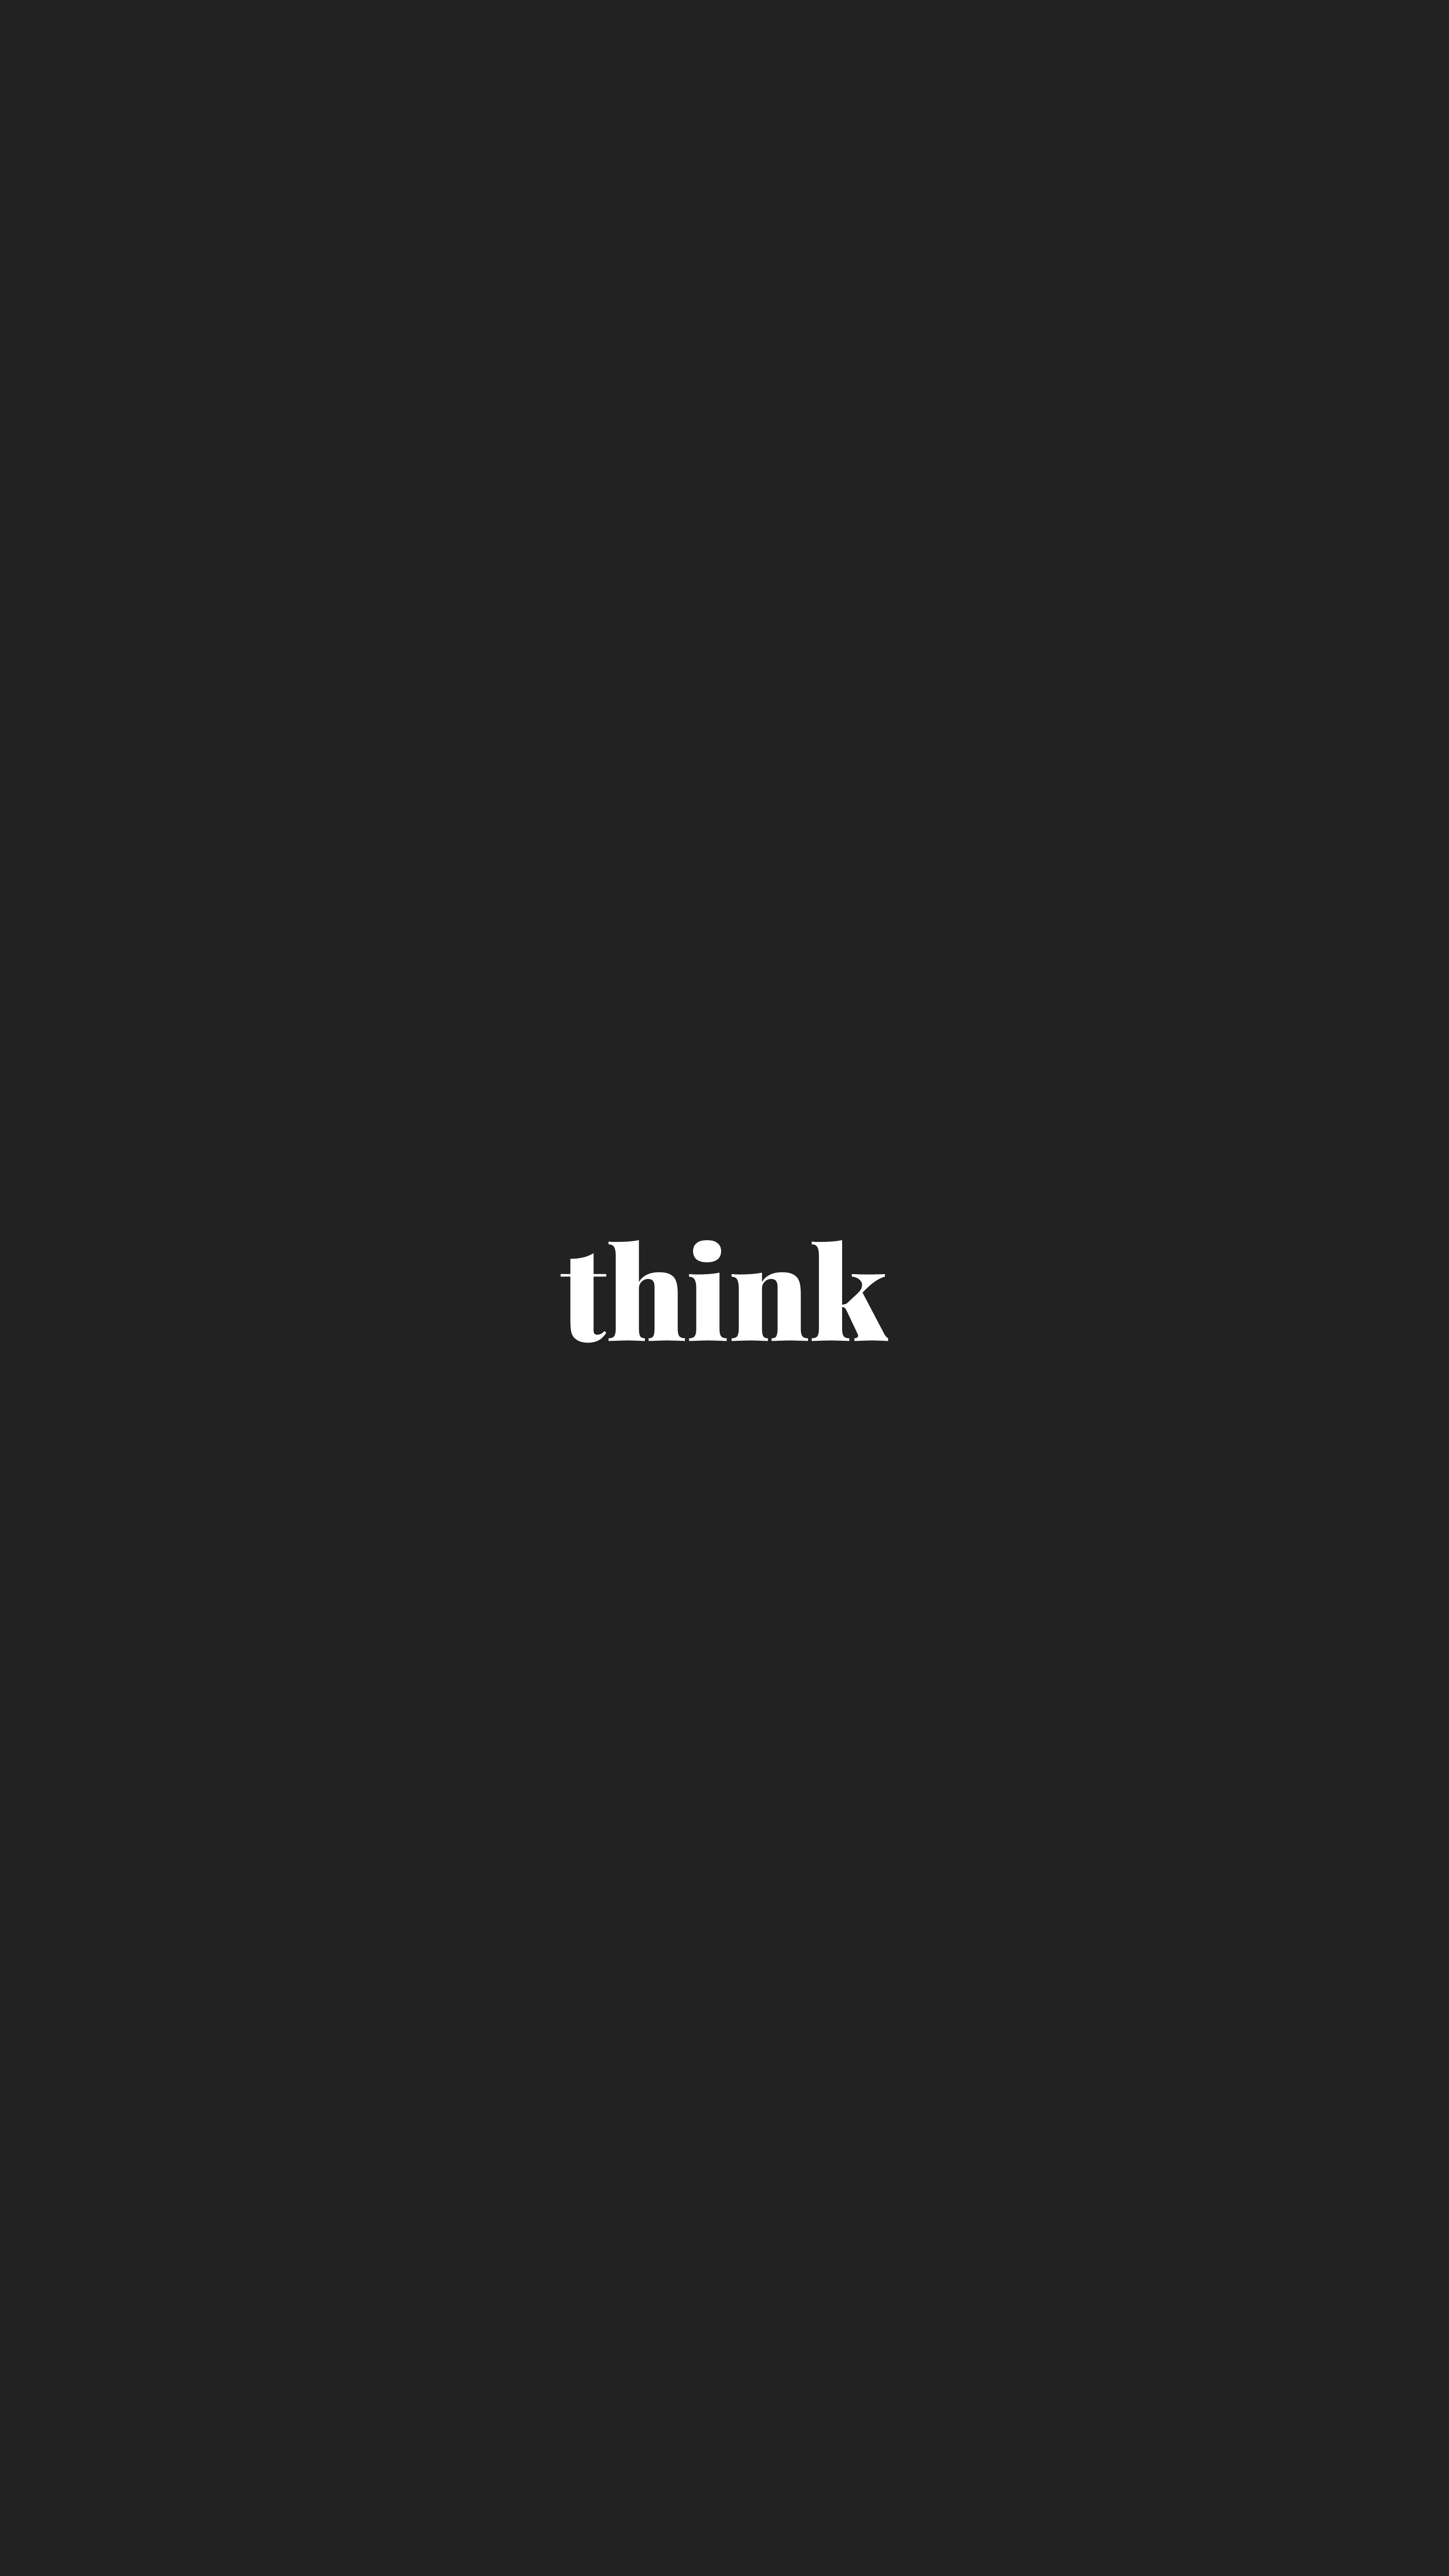 minimalism, text, words, word, think